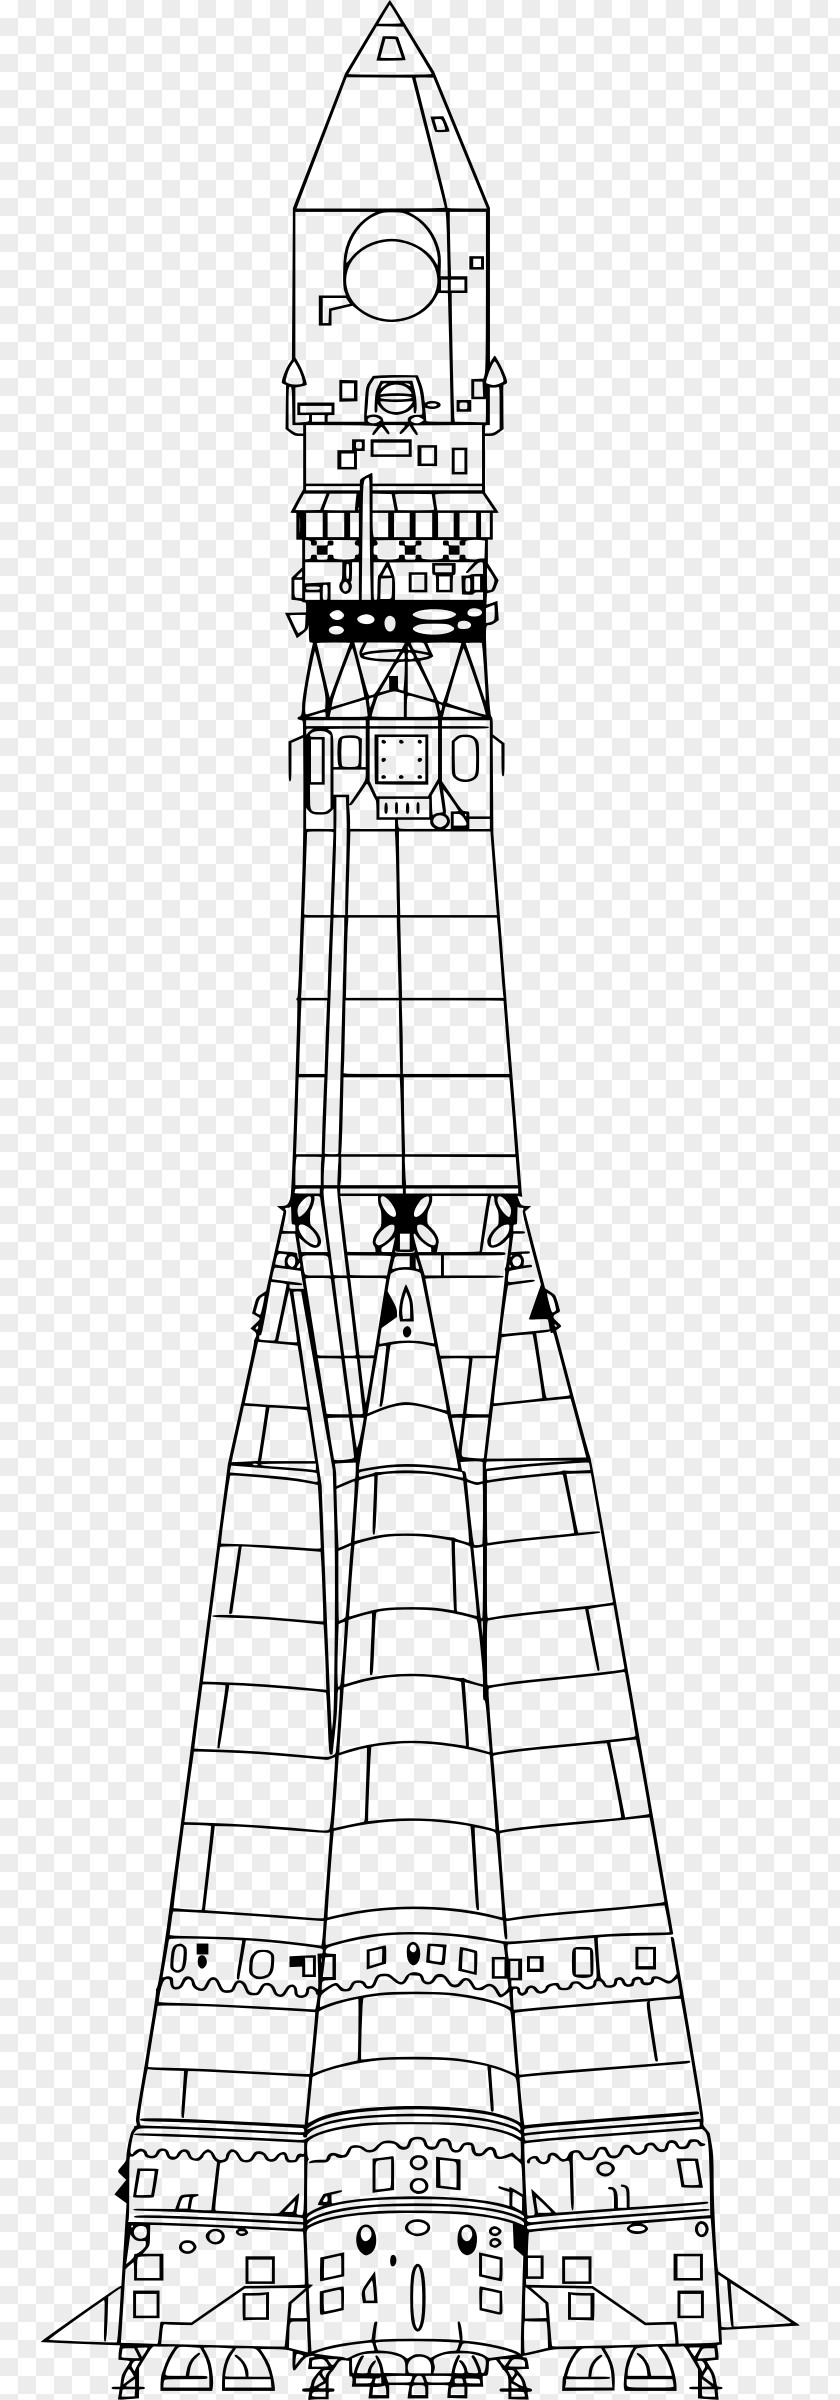 Rockets Rocket Vostok Chemical Automatics Design Bureau R-7 Semyorka Drawing PNG